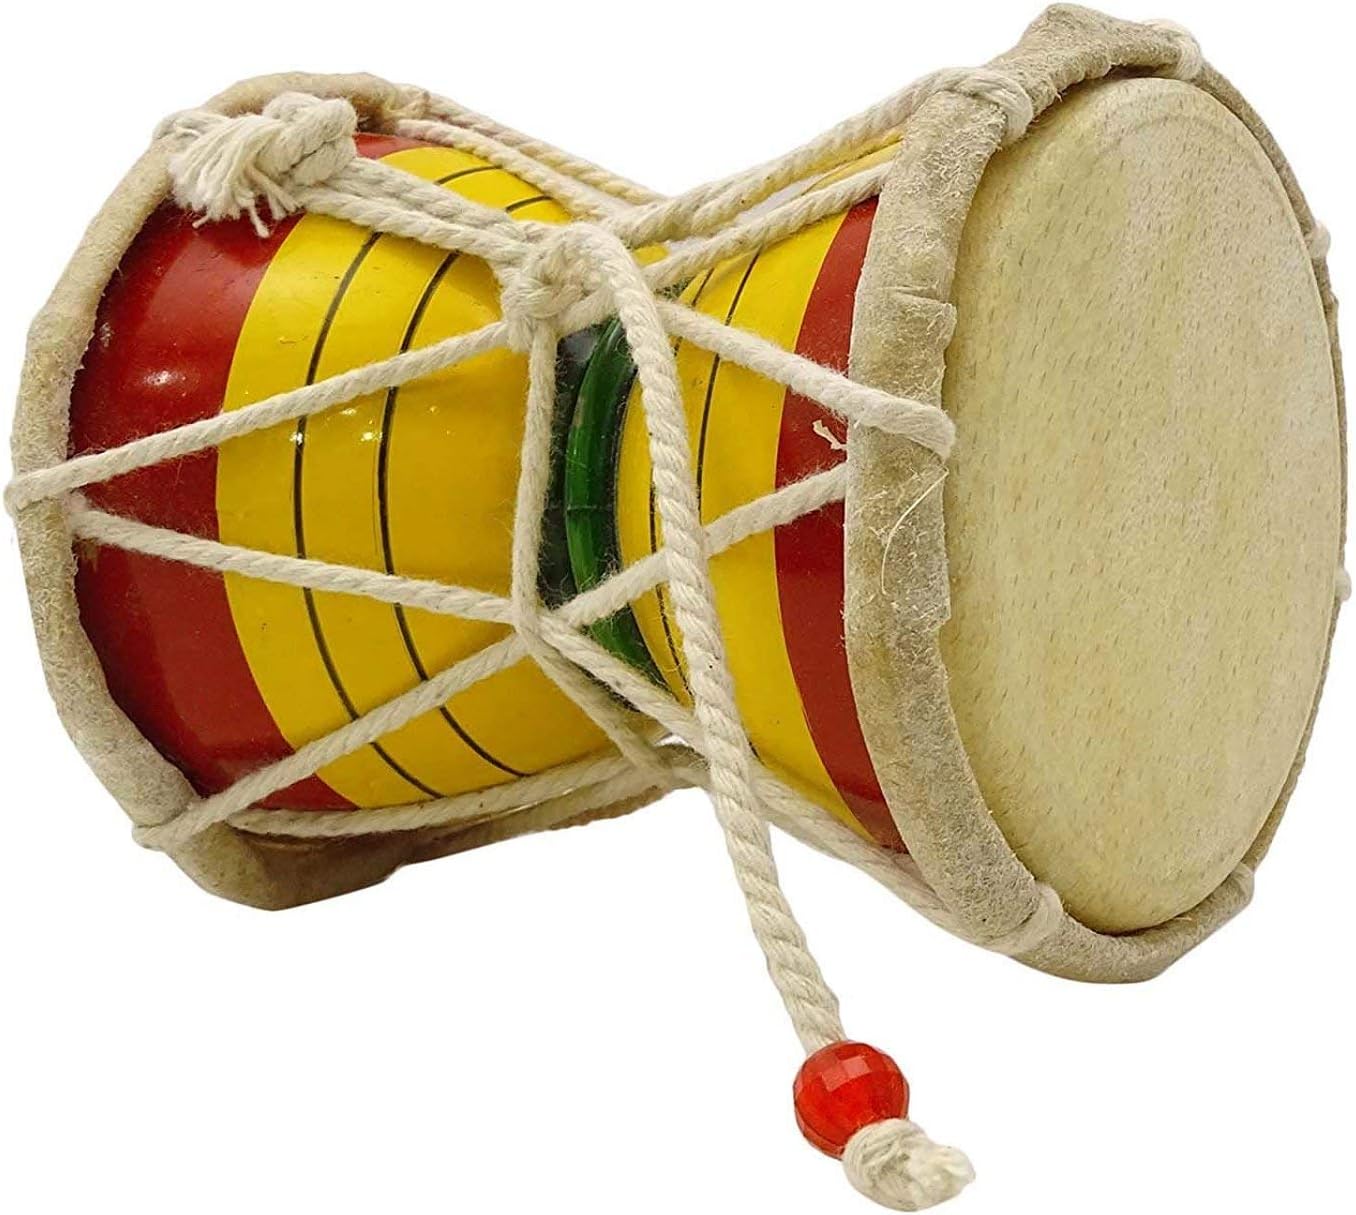 80 Rs each on buying 50+ pcs / WhatsApp at 8619550223 to order 🏷️ damru Wooden Handmade Damru for weddings and Pooja / Indian Musical Instruments Damaru Meditation Kirtan Shiv Damroo (6 inch size)